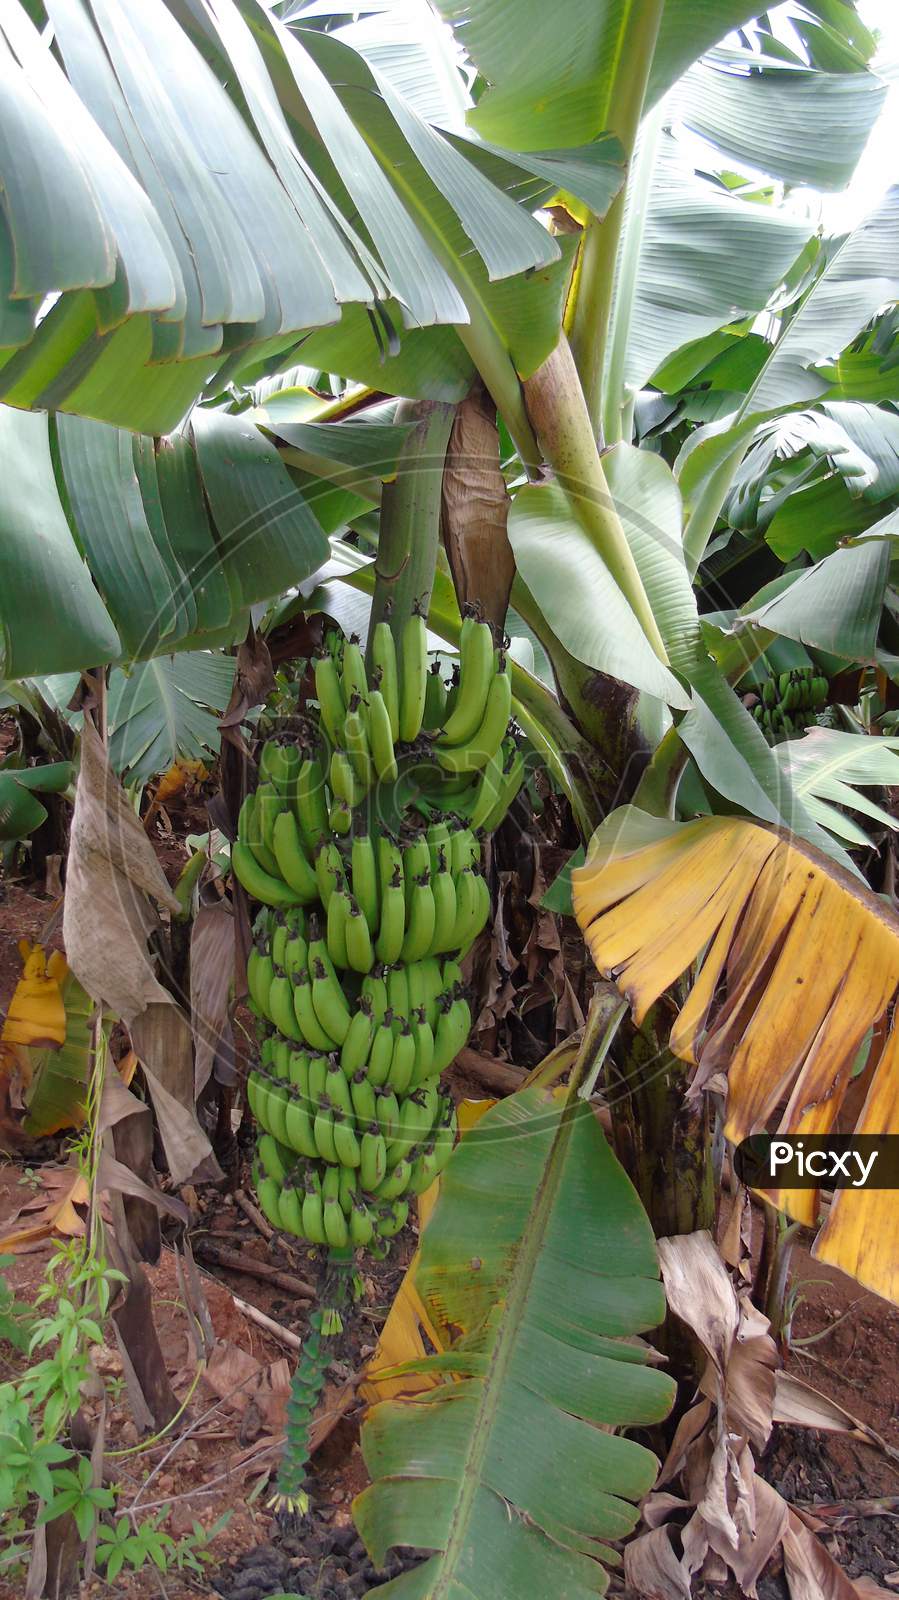 Banana plant with bunch of green banana